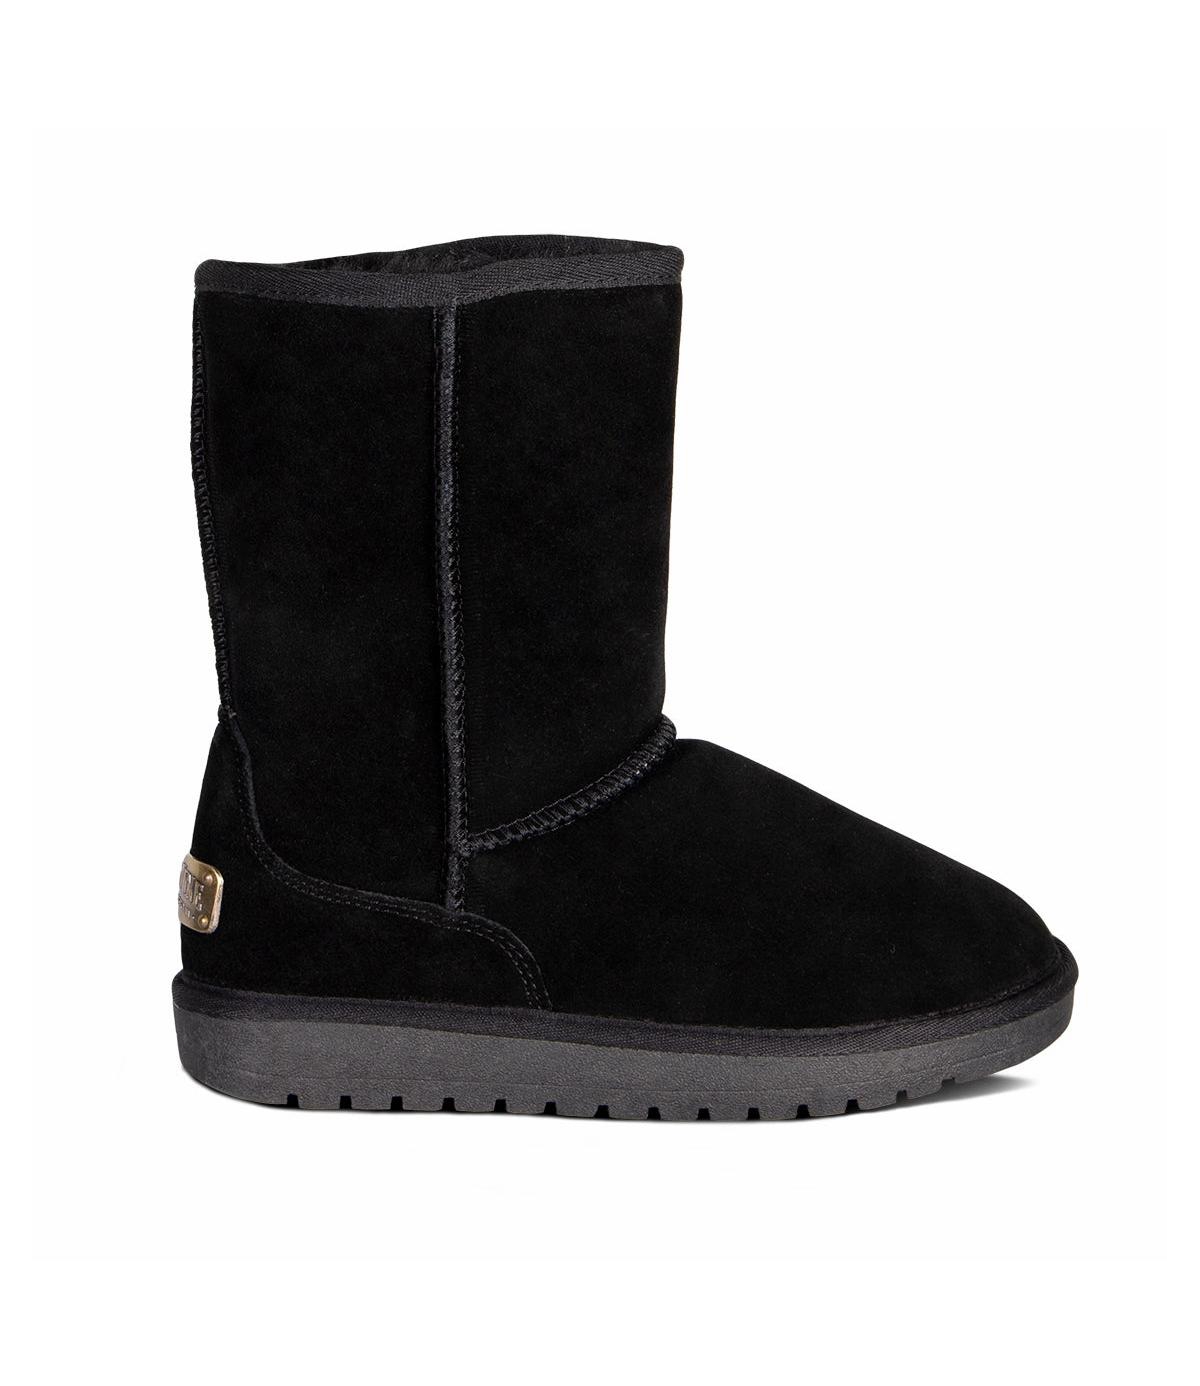 Ladies 9 Inch Comfort Winter Boots - Chestnut